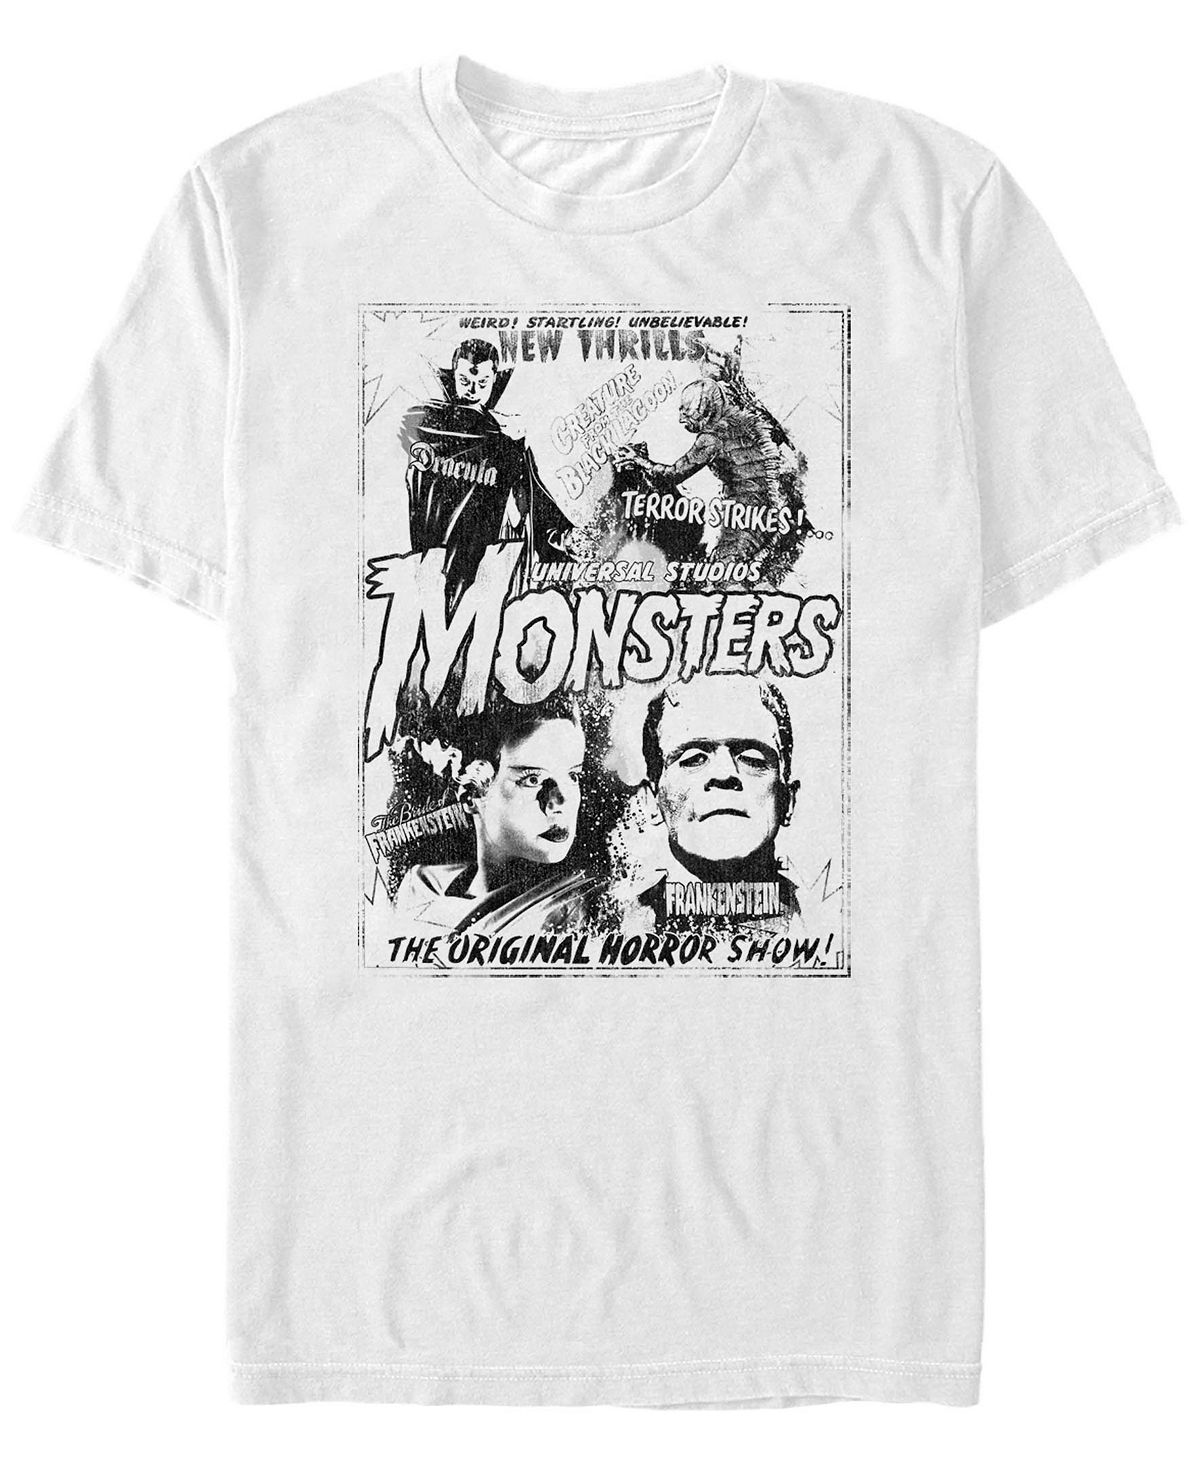 Мужская футболка с короткими рукавами universal monsters vintage-like horror Fifth Sun, белый